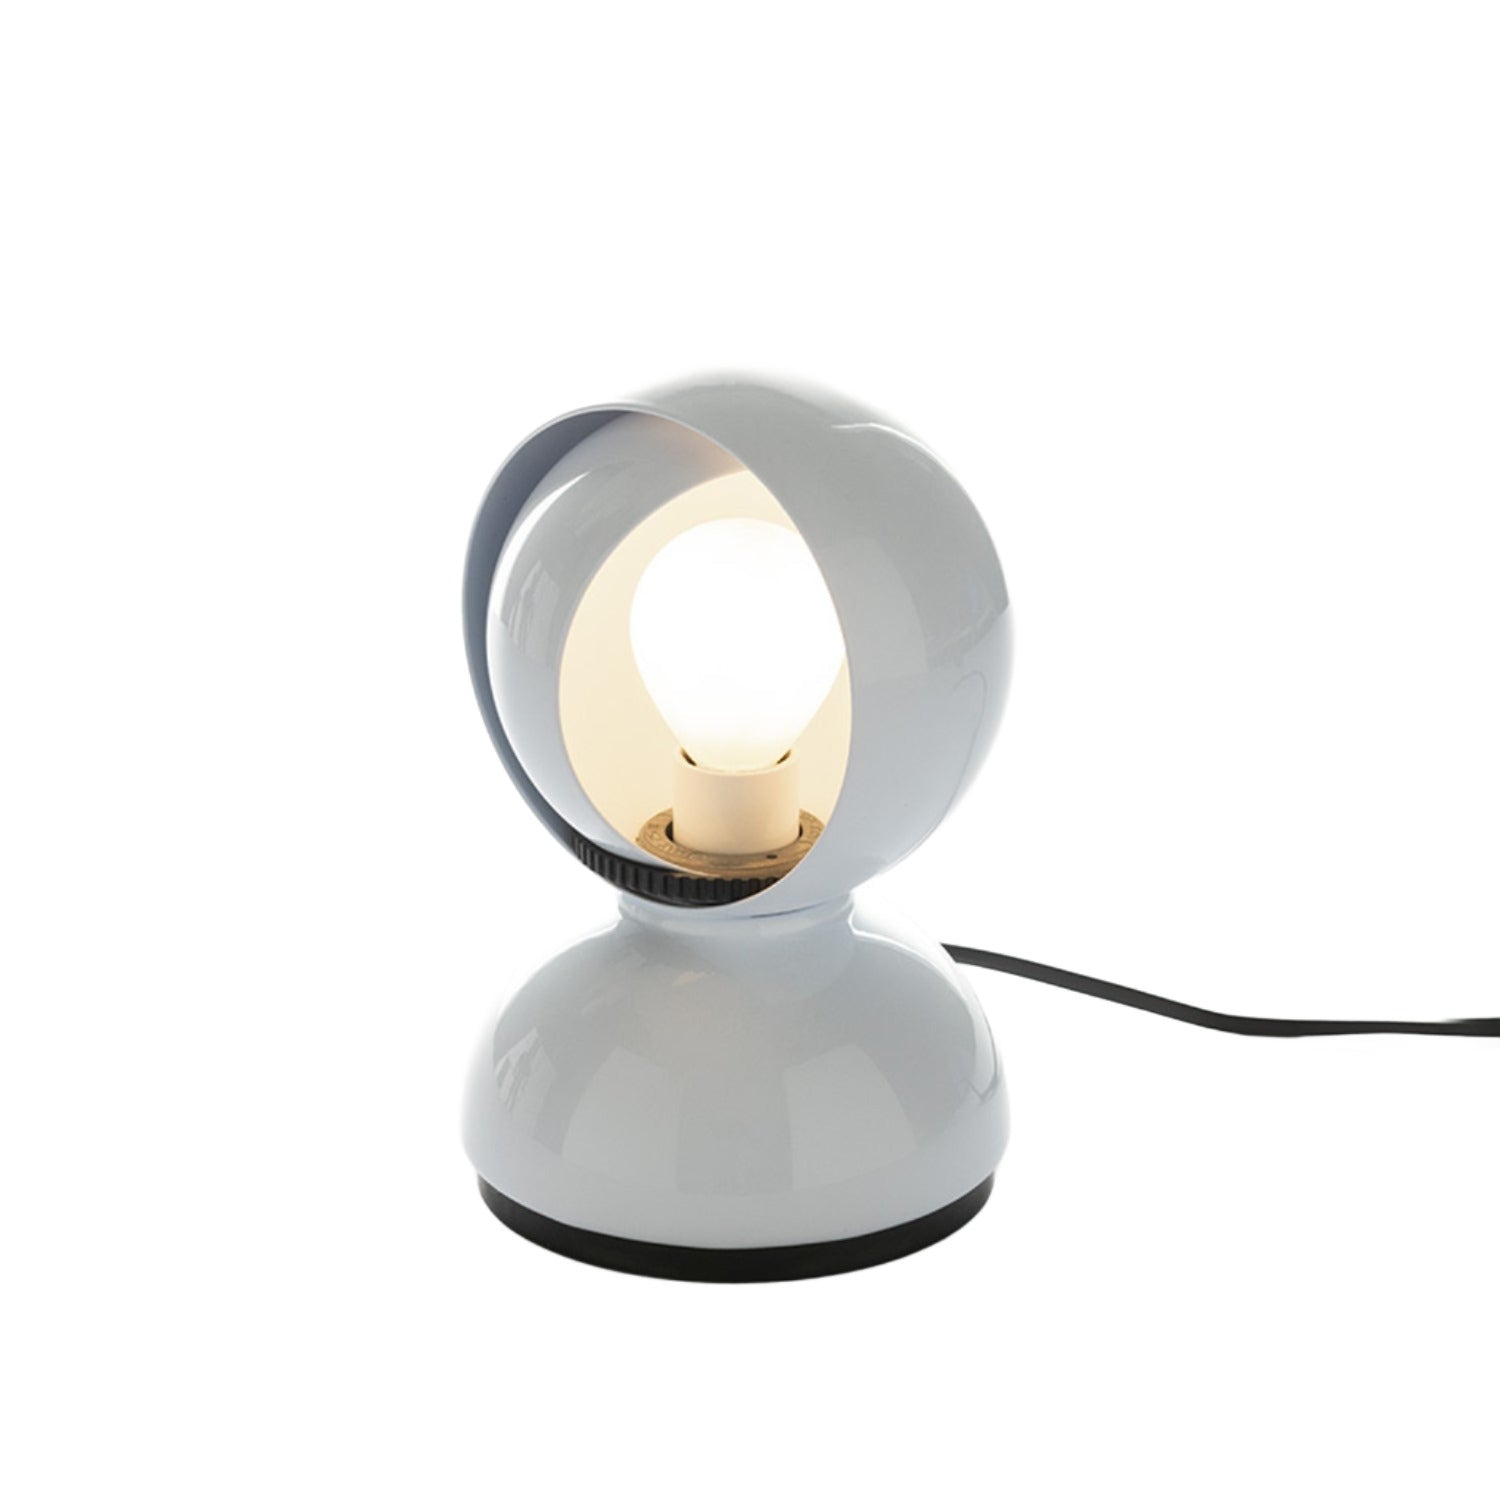 Artemide Eclisse Table Lamp White